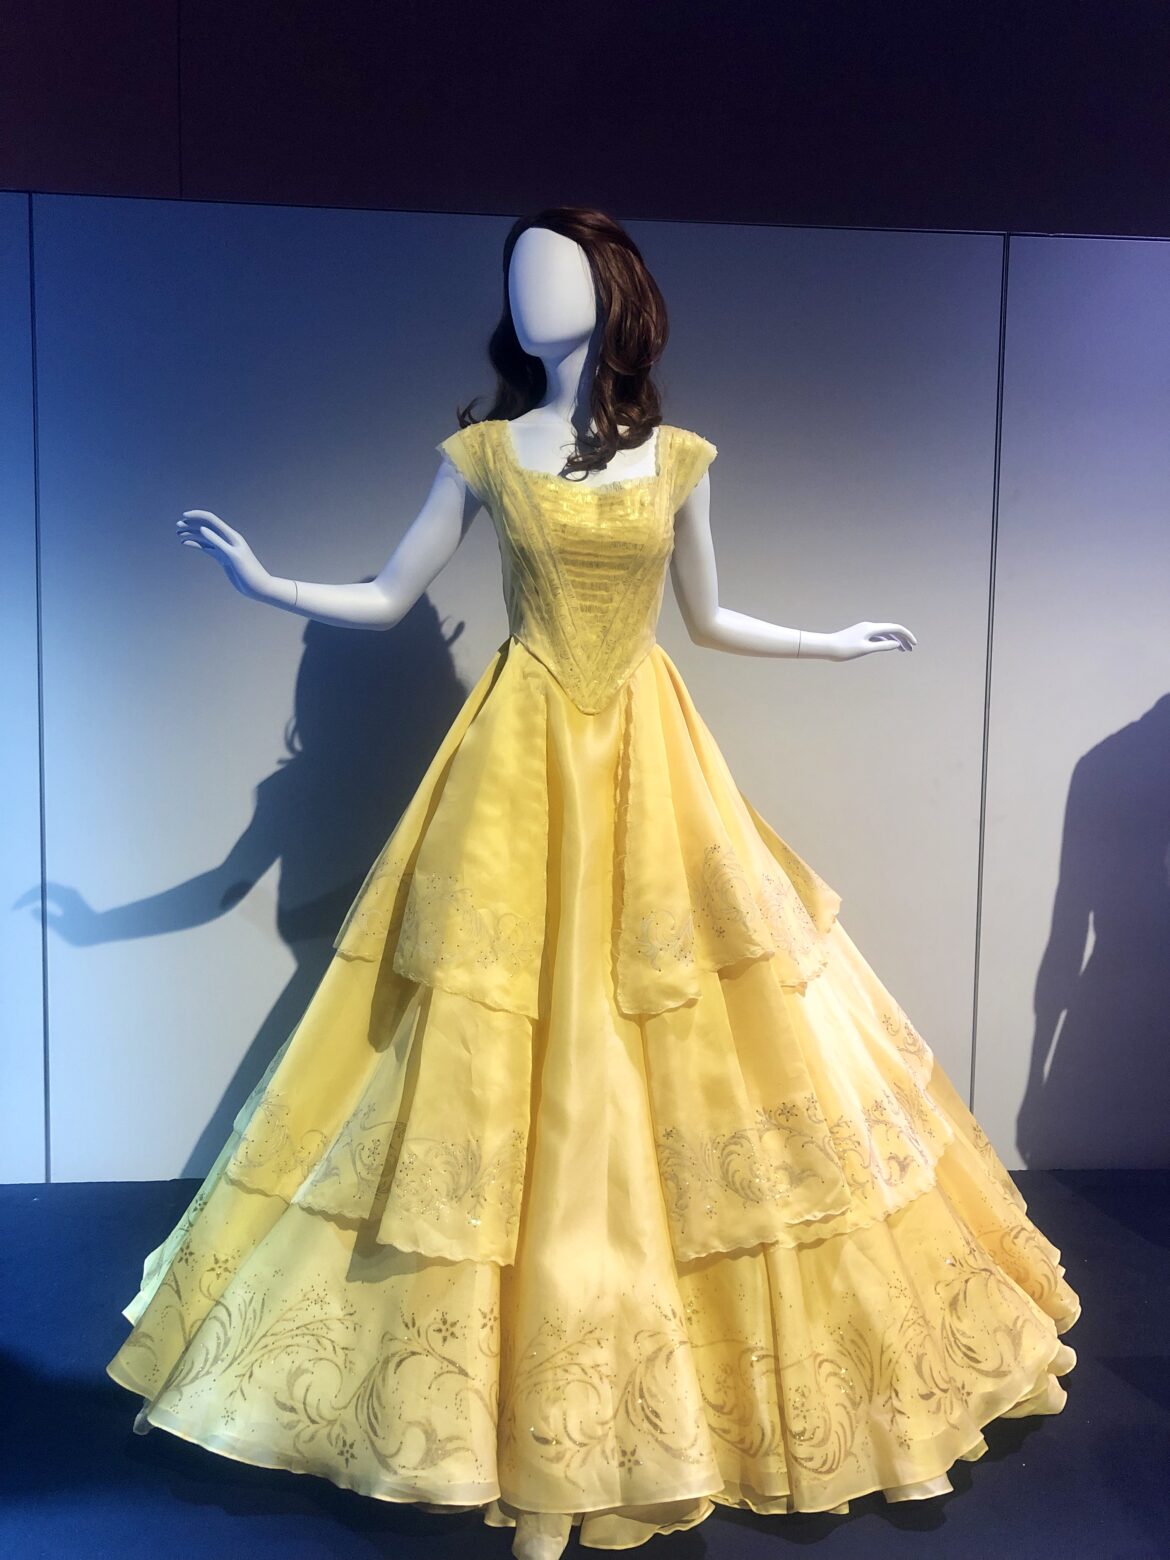 Museum of Pop Culture presents exclusive Disney costume exhibition